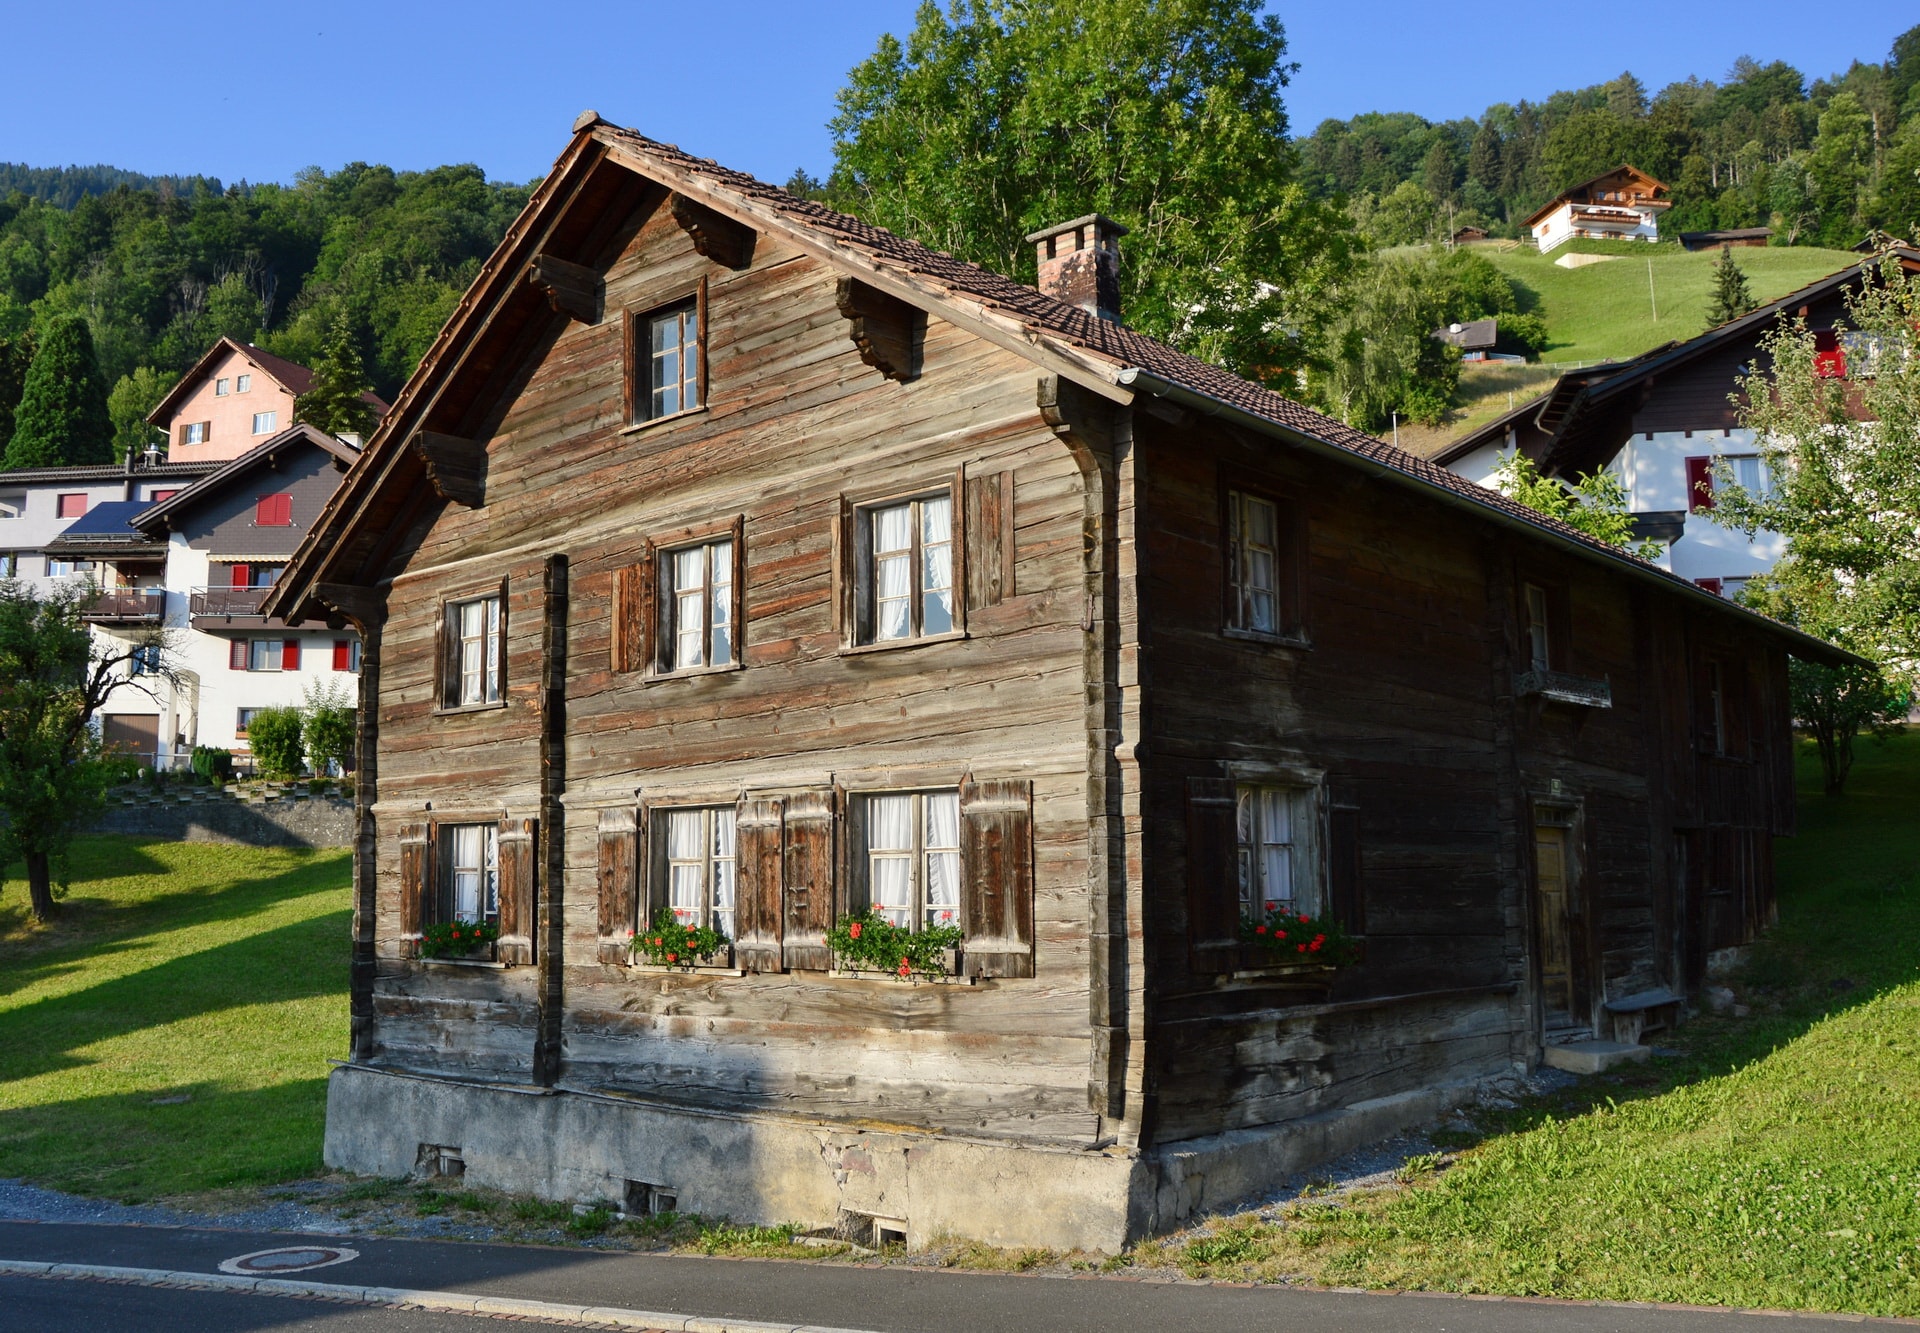 Traditional Alpine architecture